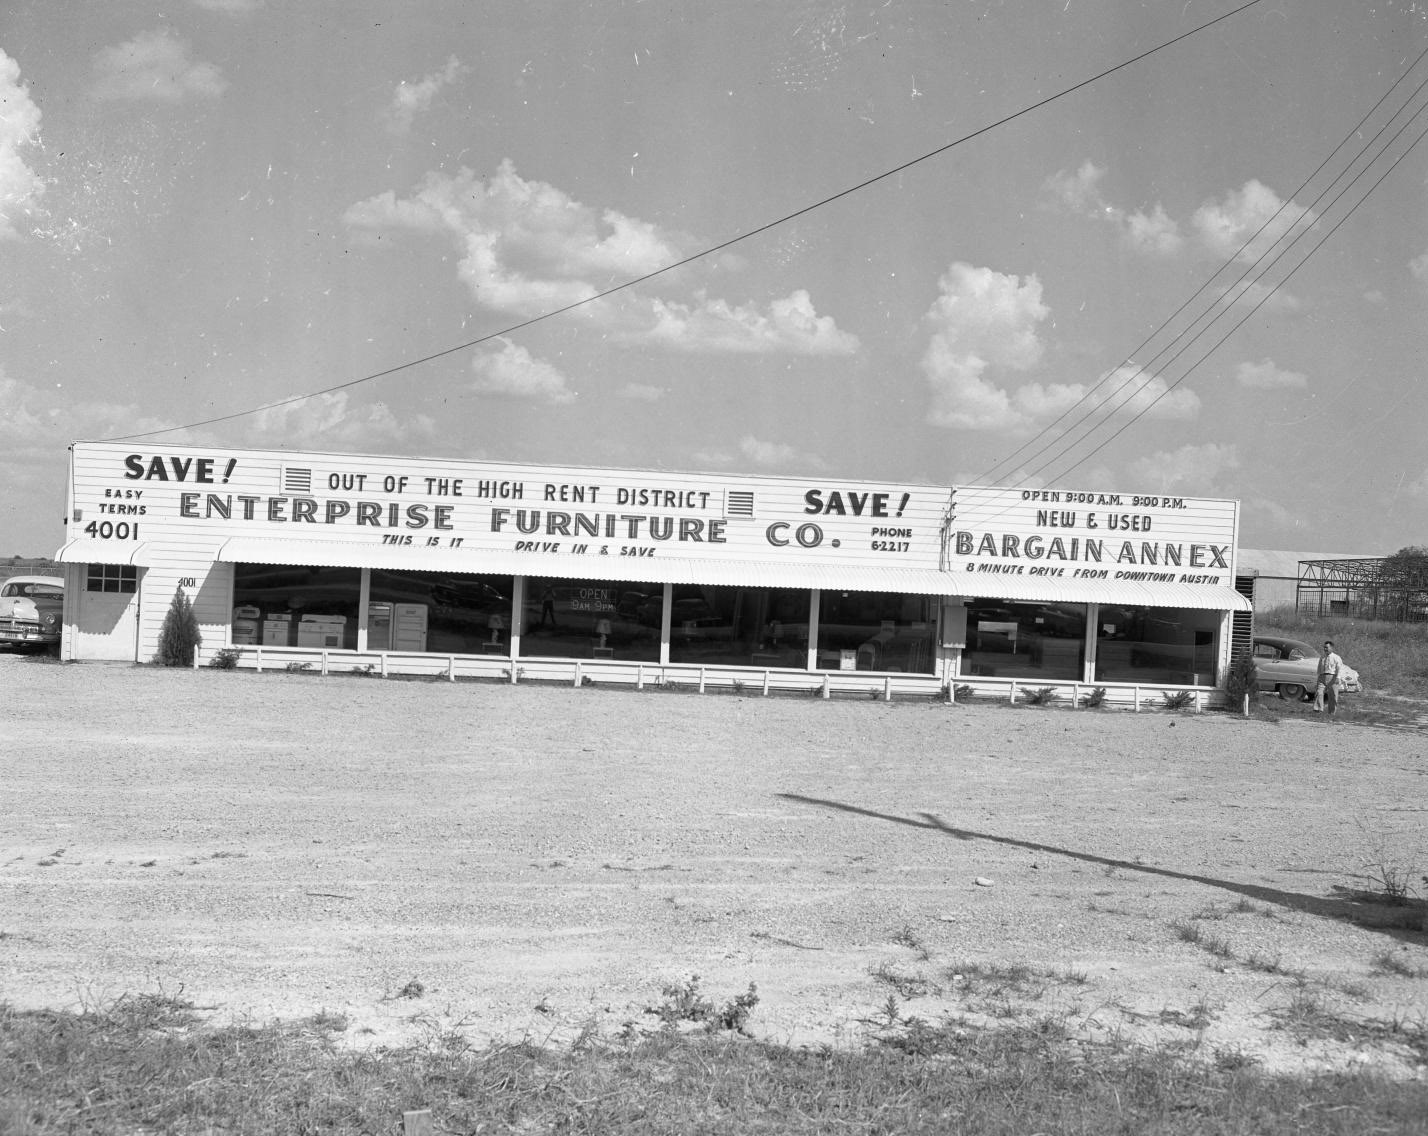 Exterior of Enterprise Furniture Company, 1951